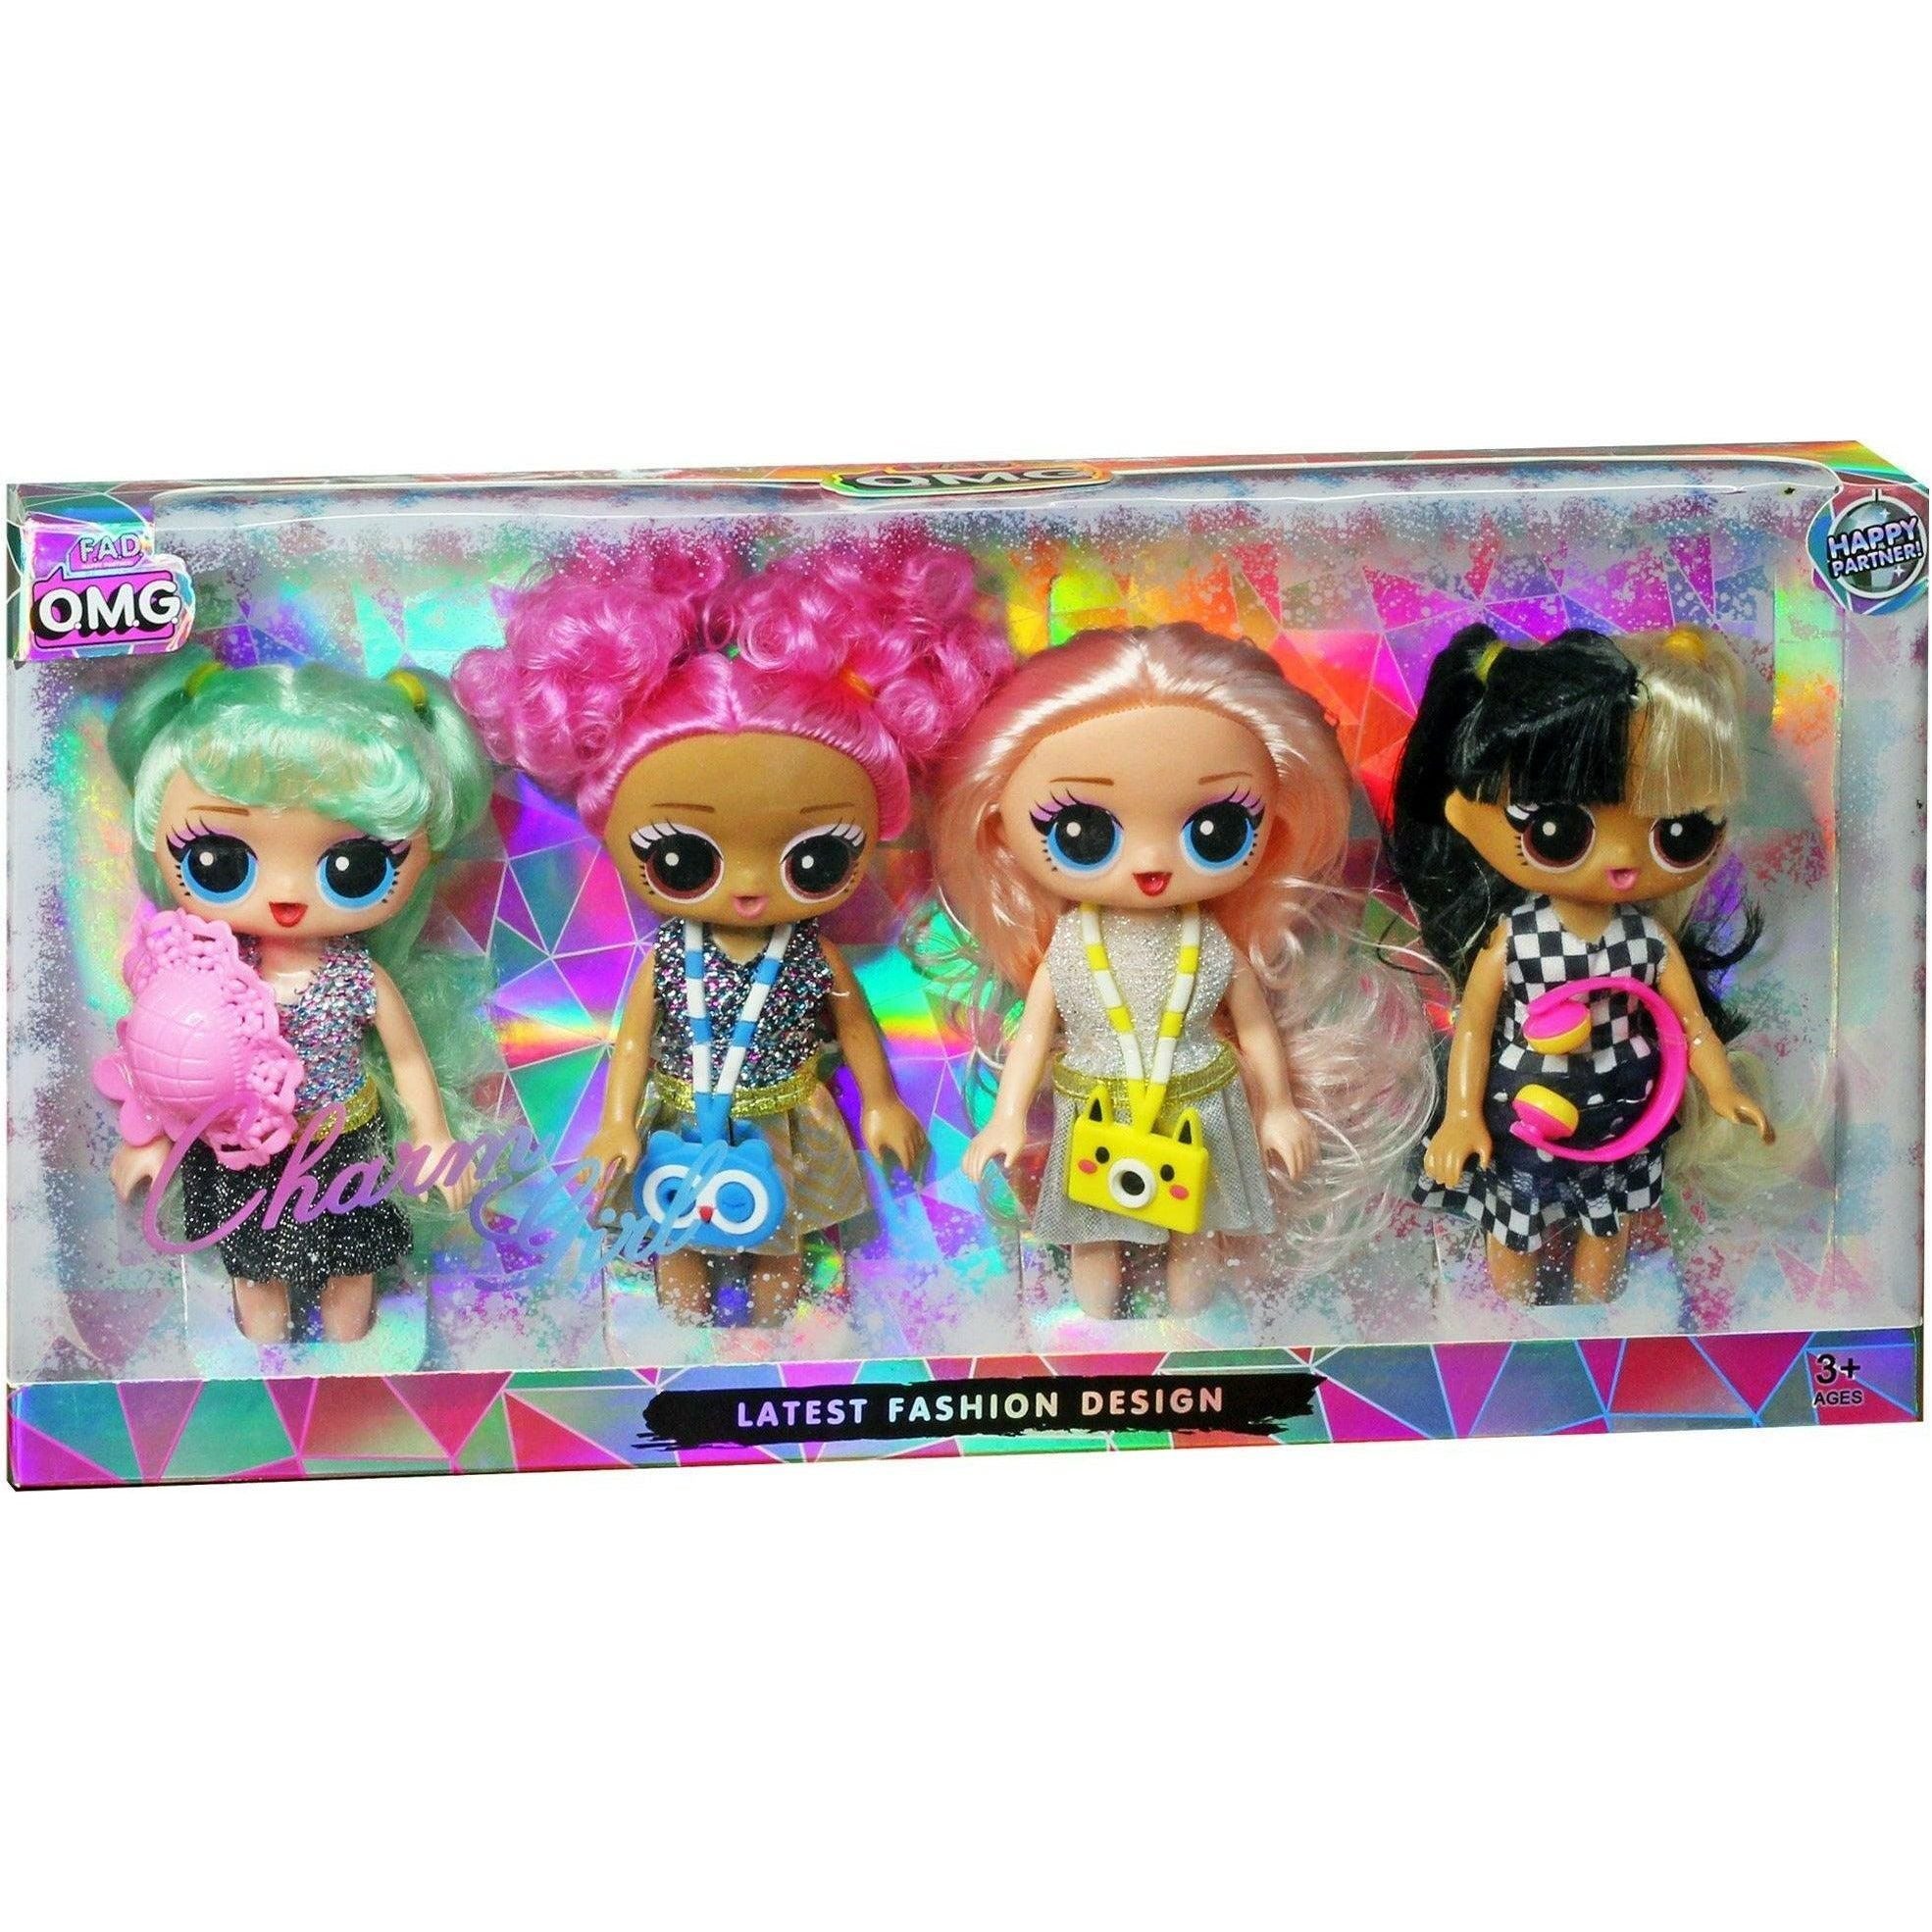 L.O.L Surprise O.M.G Fashion 4 Dolls Playset - BumbleToys - 5-7 Years, Fashion Dolls & Accessories, Girls, L.O.L, Toy Land